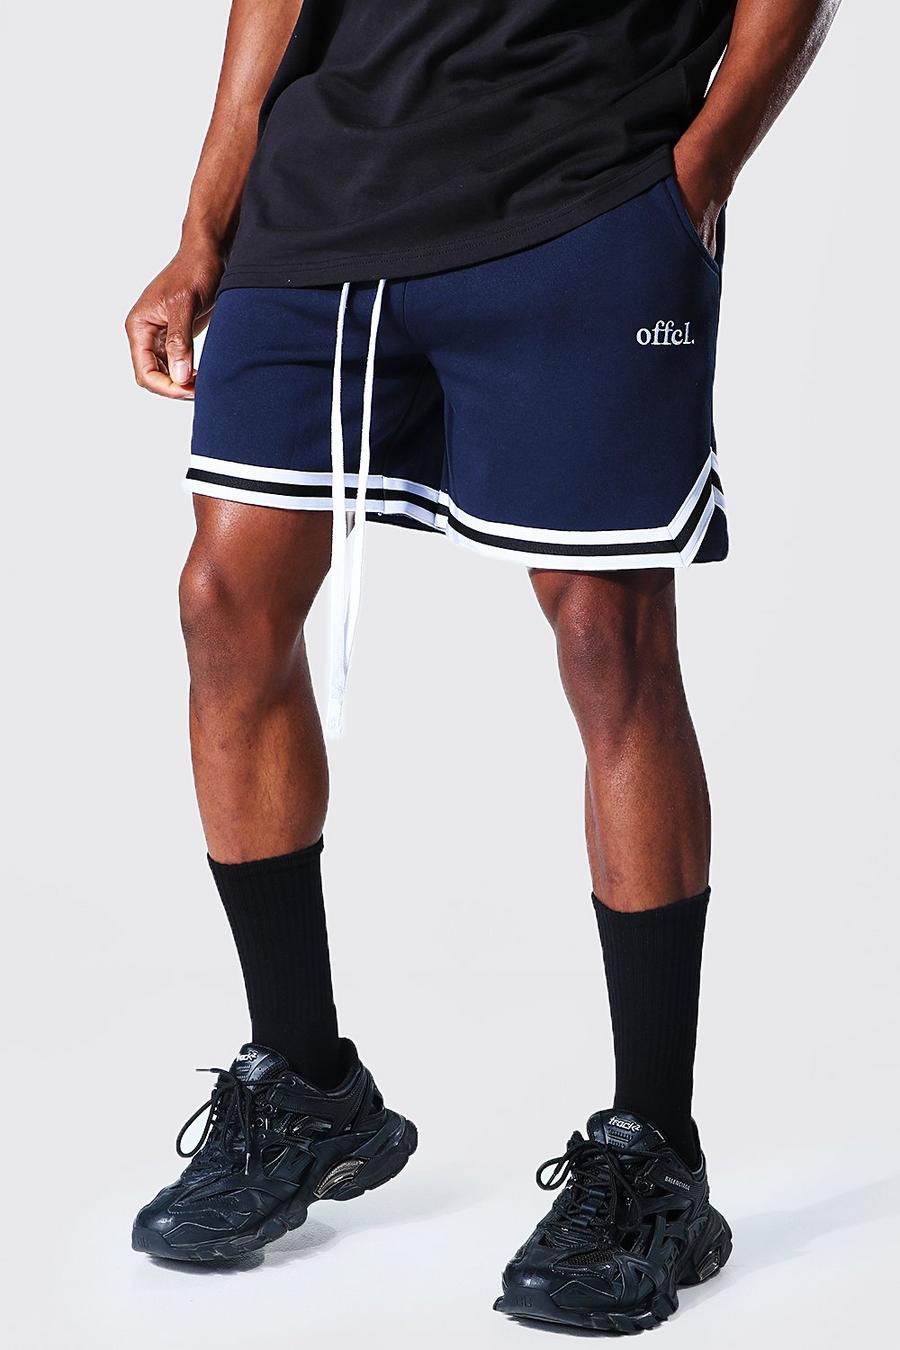 Navy Short Length Offcl Basketball Jersey Shorts image number 1